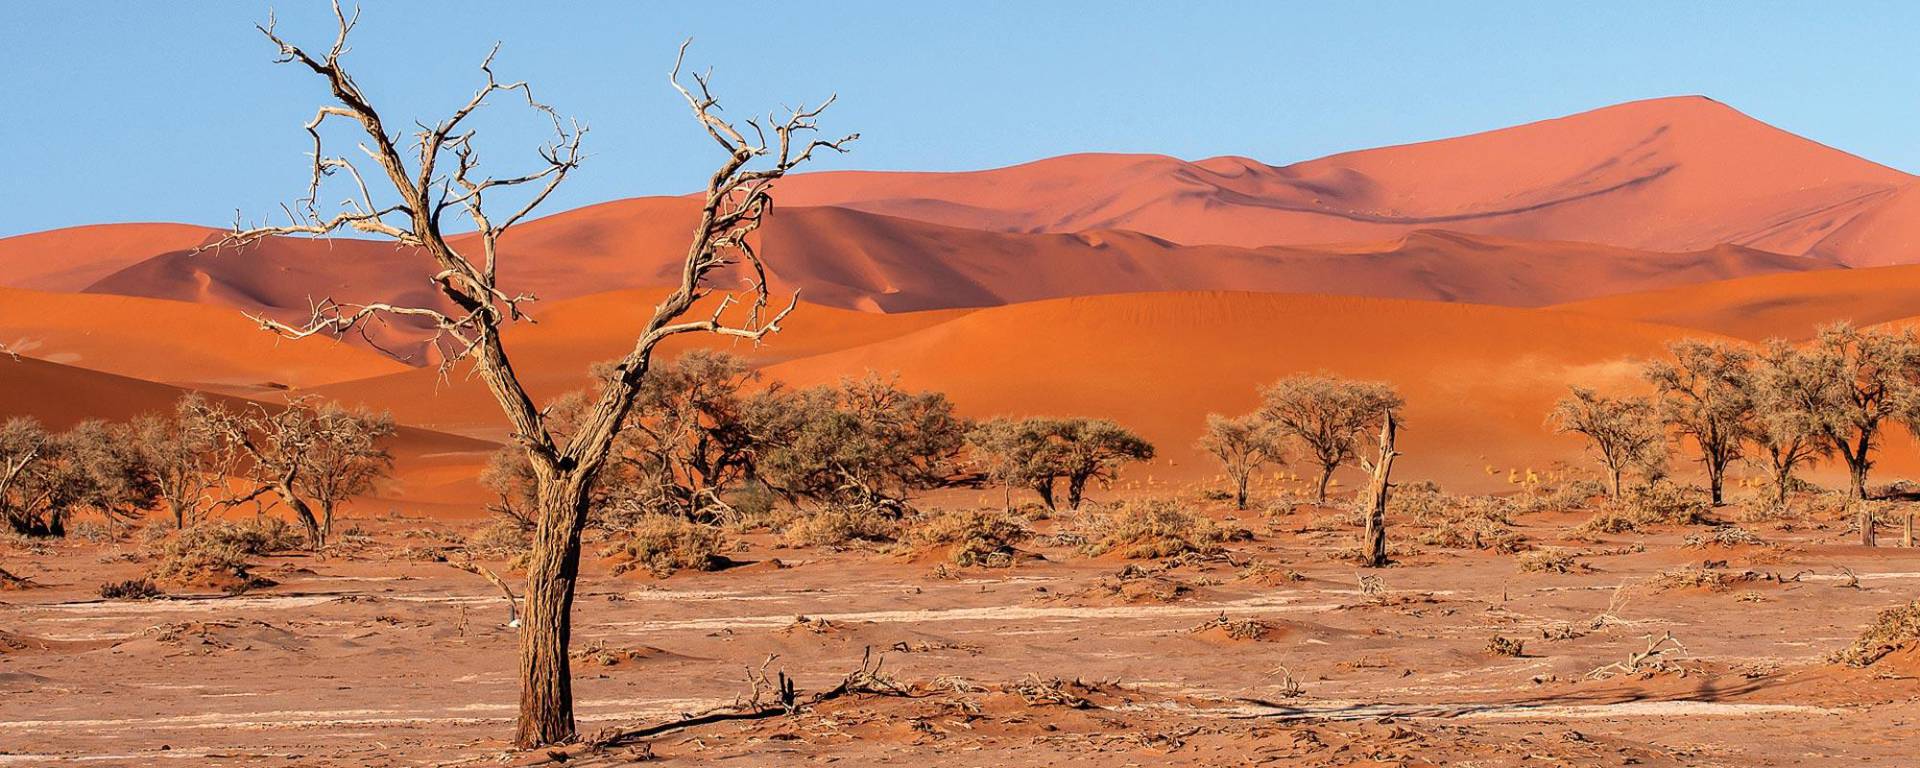 The orange dunes of the Sossusvlei in the Namib